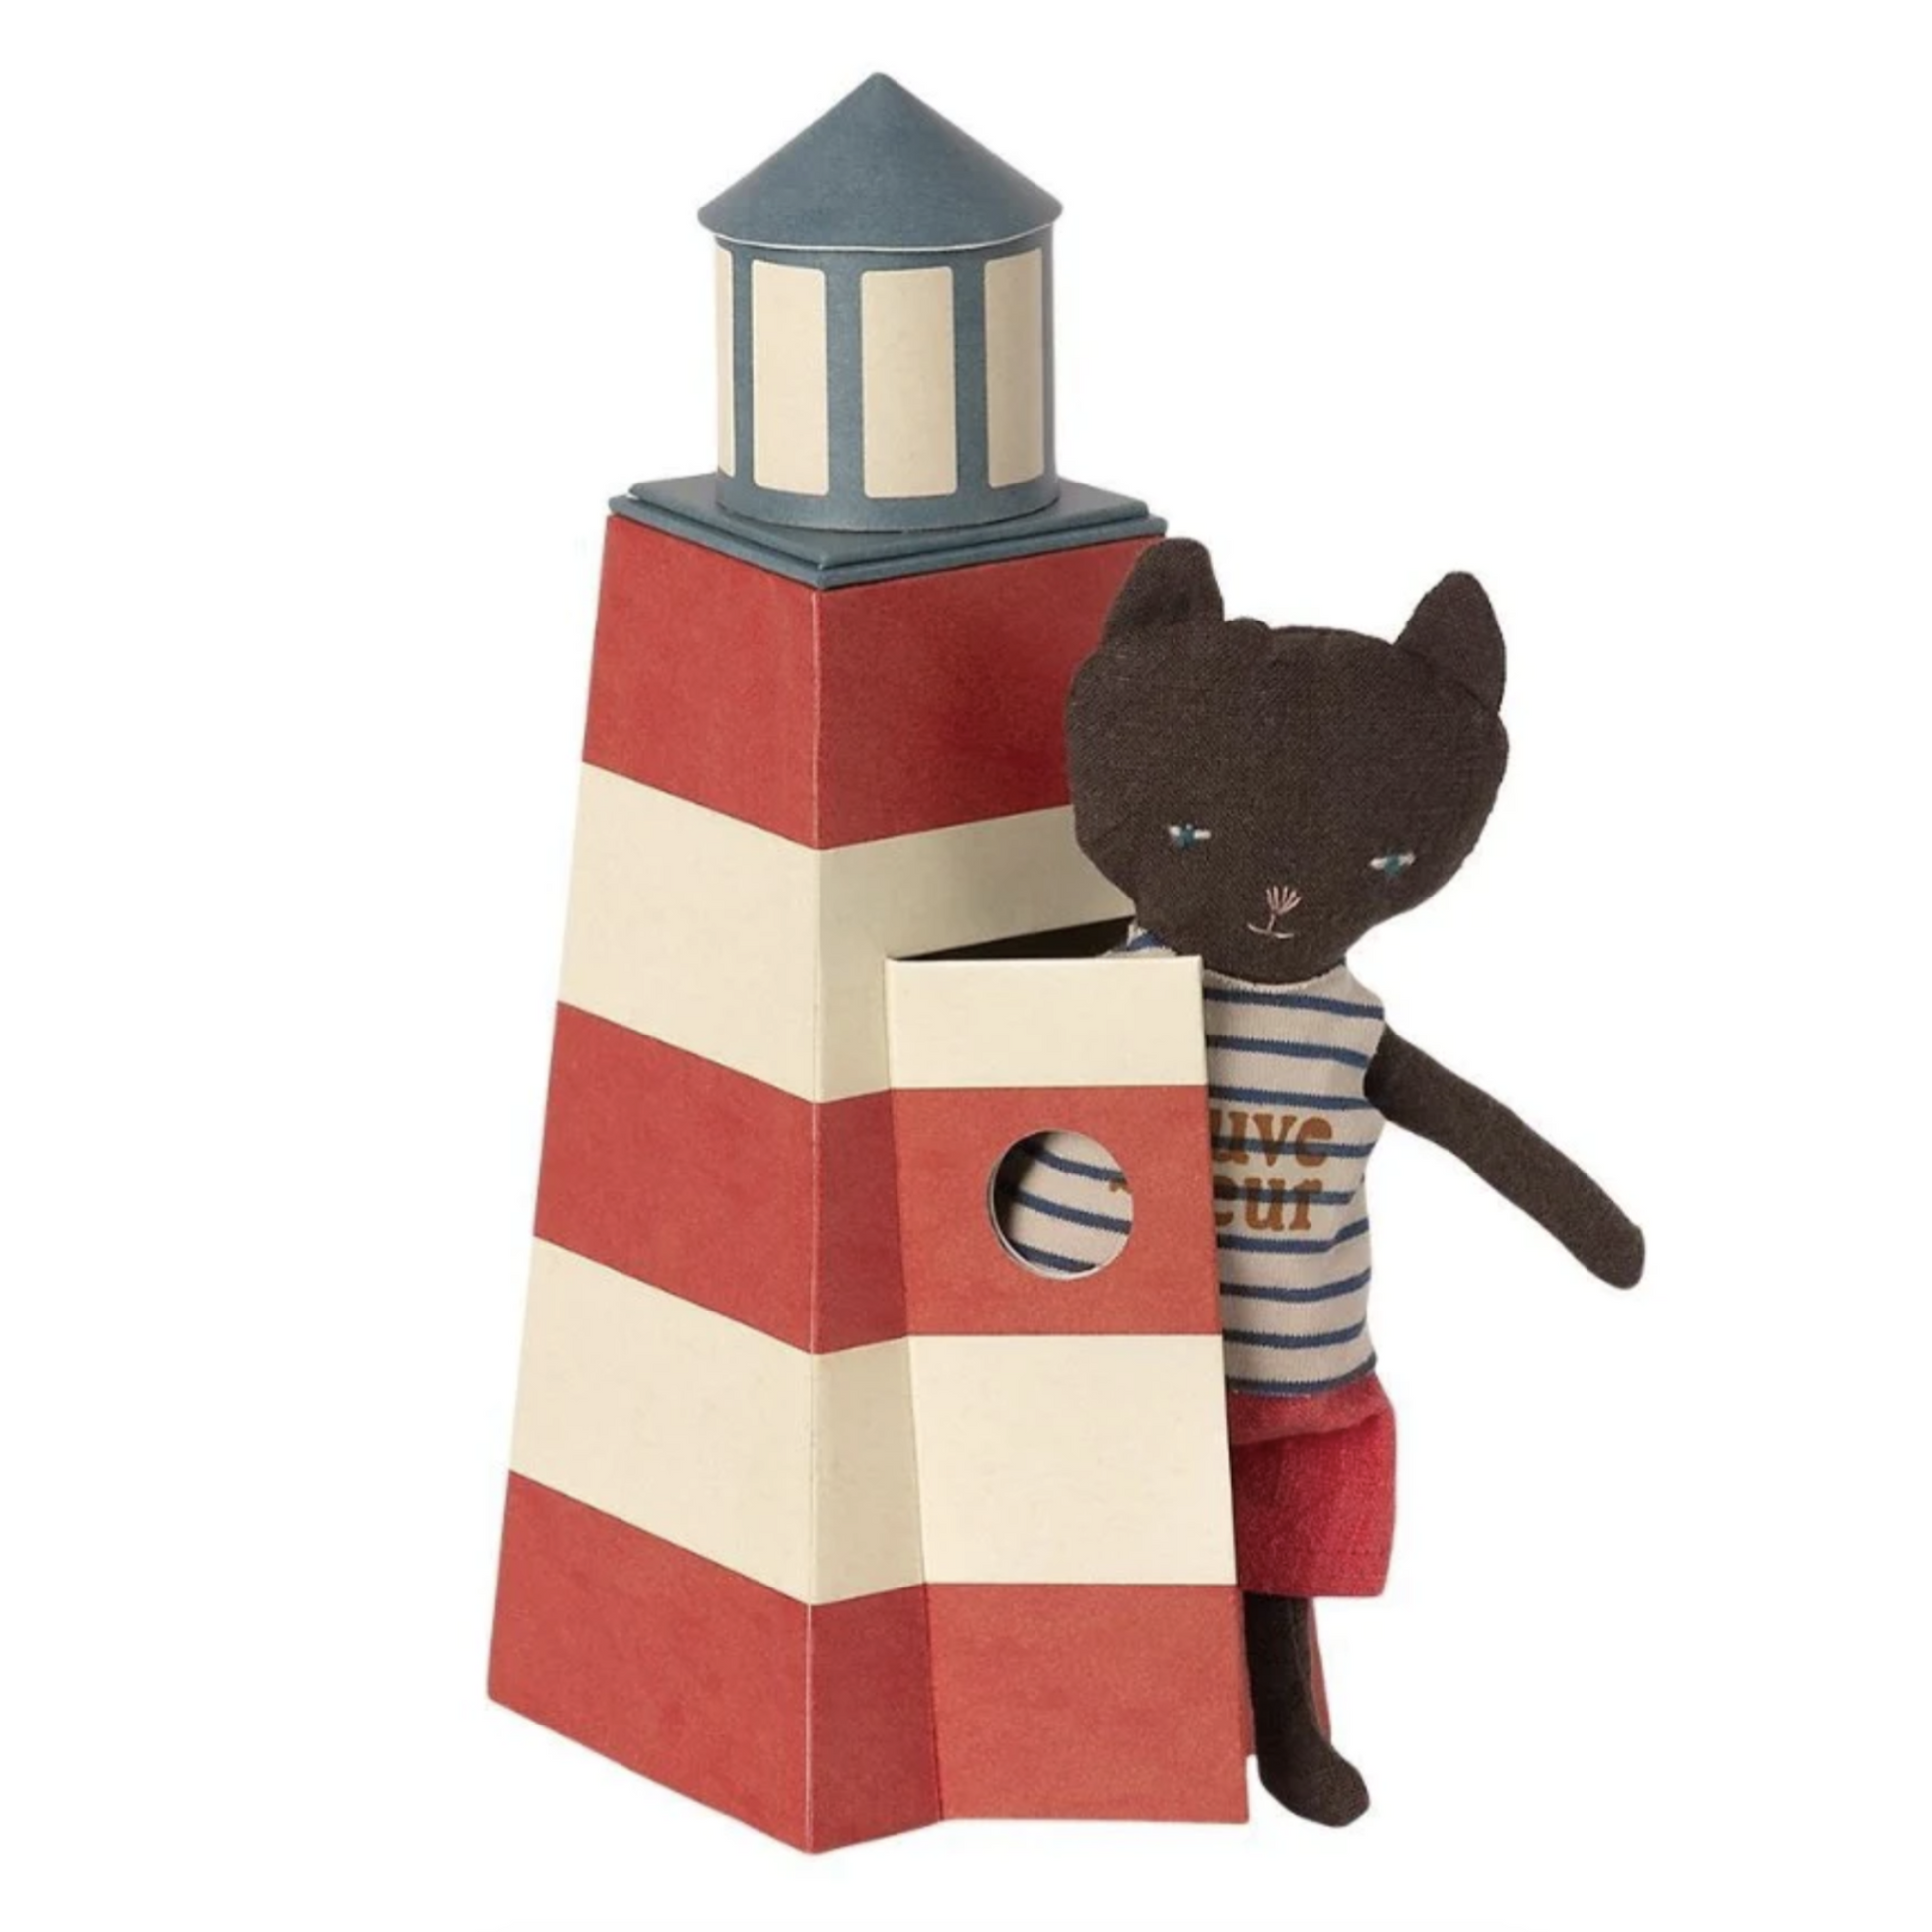 Maileg Lifeguard Tower with Cat (8158197252383)